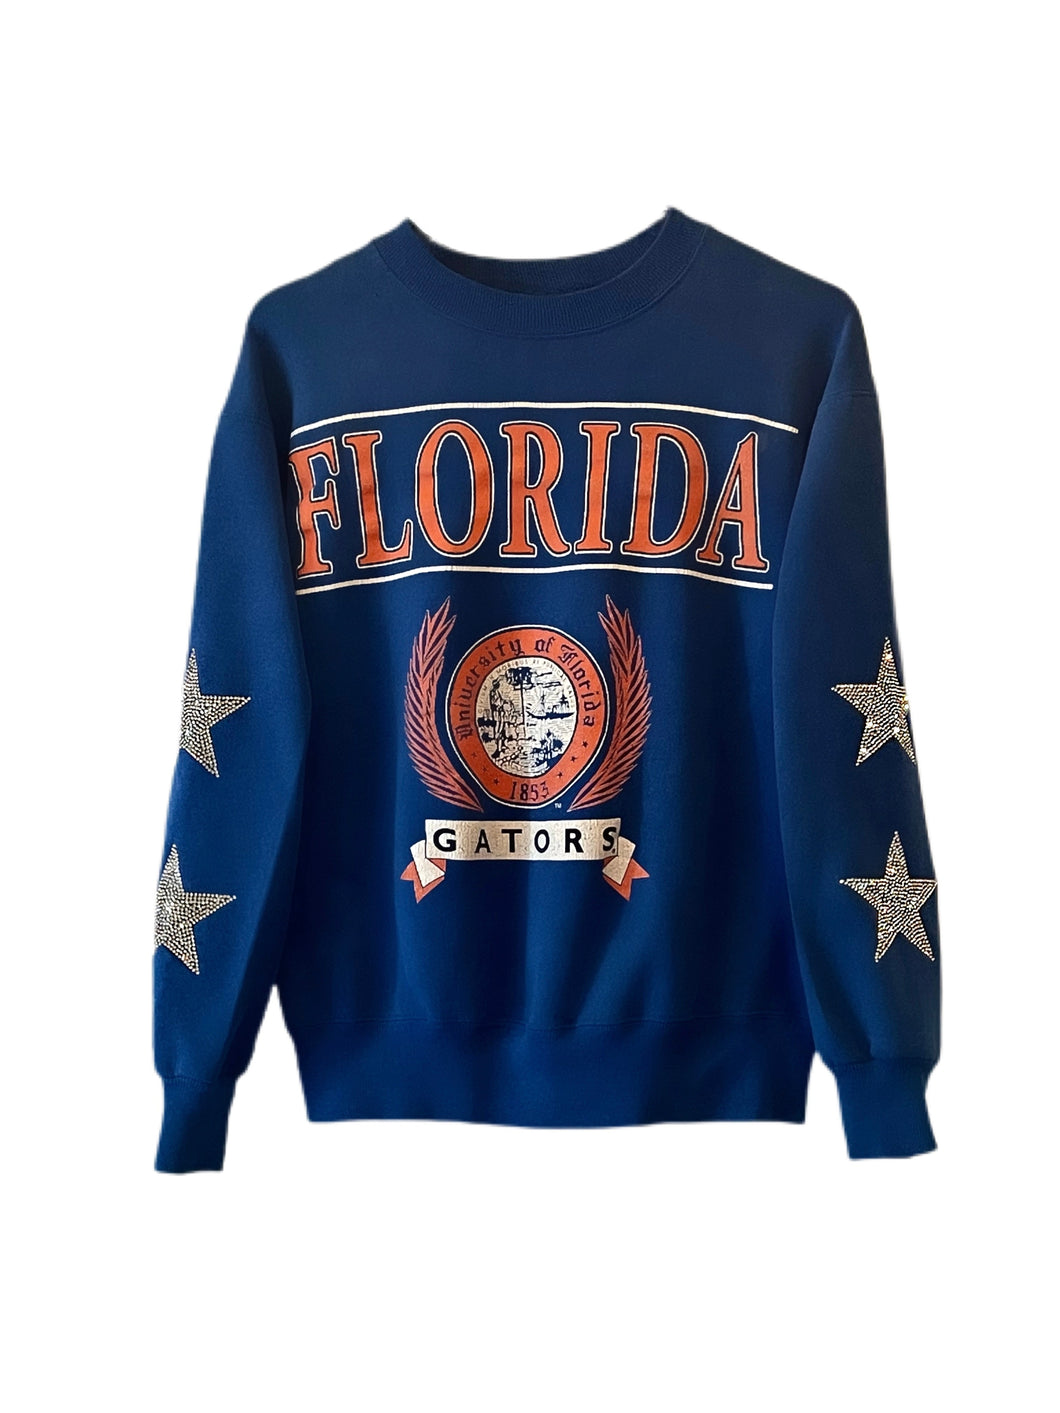 University of Florida, One of a KIND Vintage UF Sweatshirt with Crystal Star Design